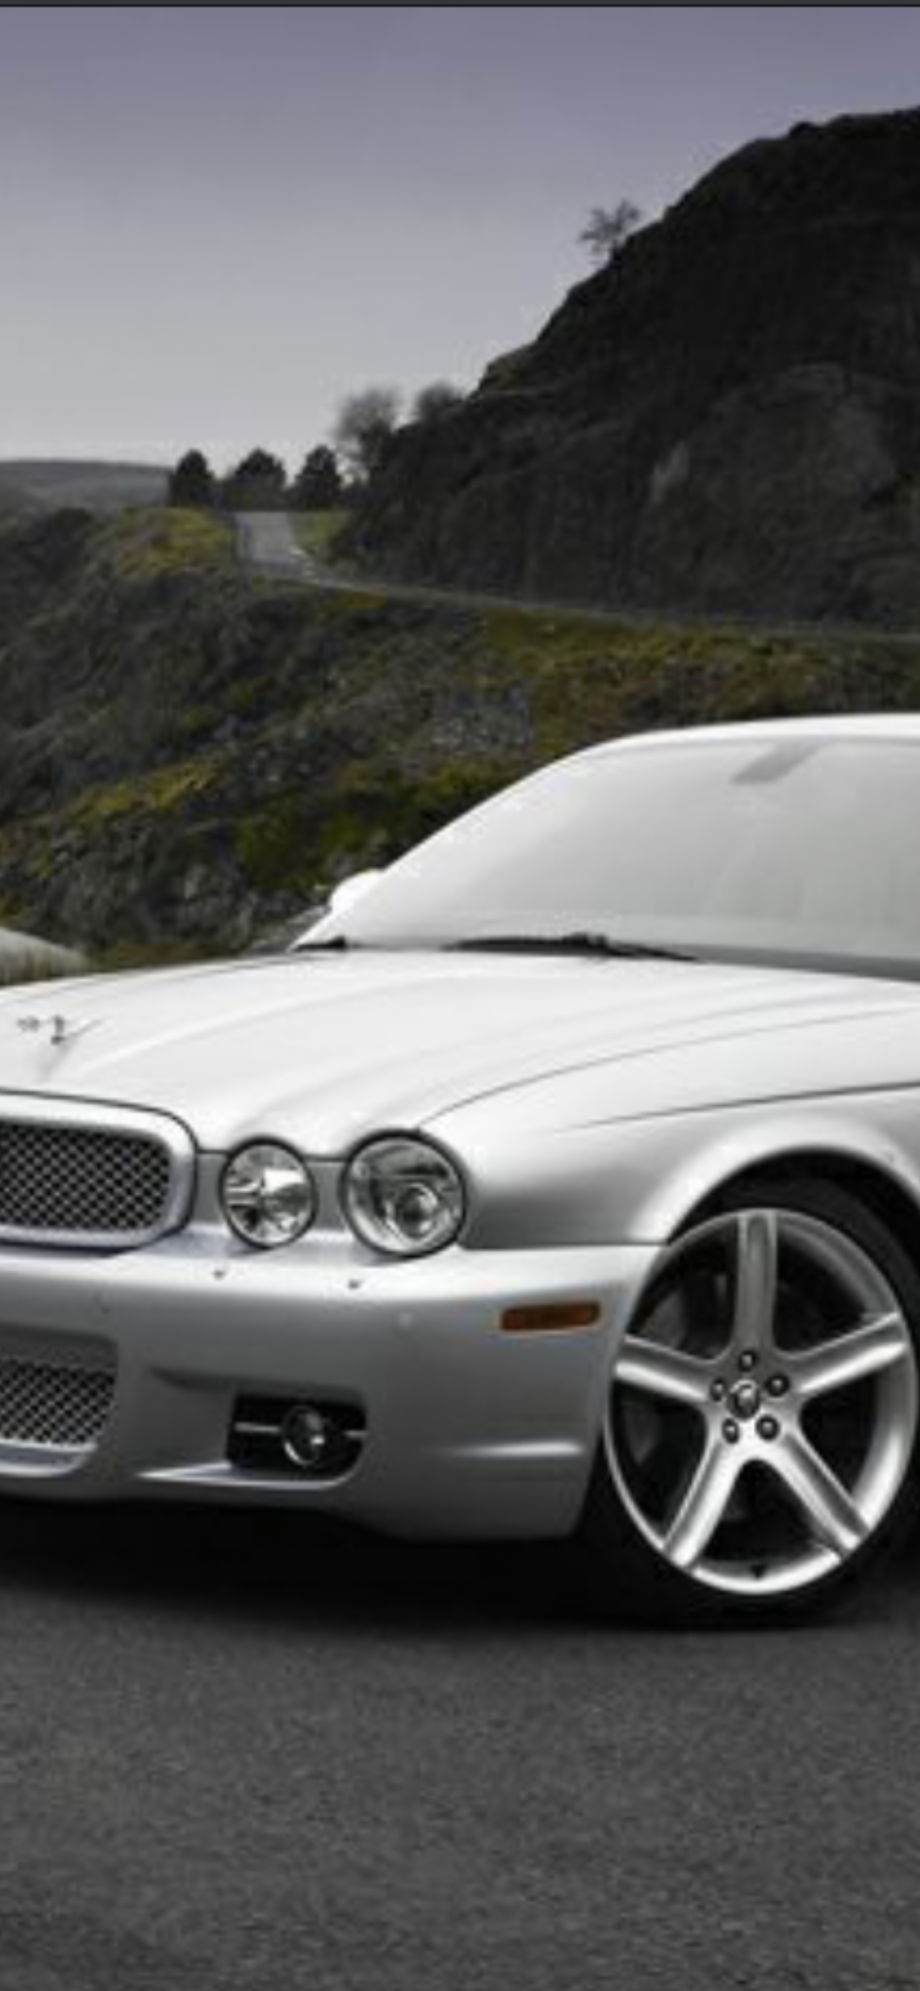 2008 - 2009 Jaguar Super V8 - 2008-2009 LOOKING for XJR-SUPER~8-Portfolio. Interested in x350 2004/7 Unicorns - Used - Naples, FL 34110, United States